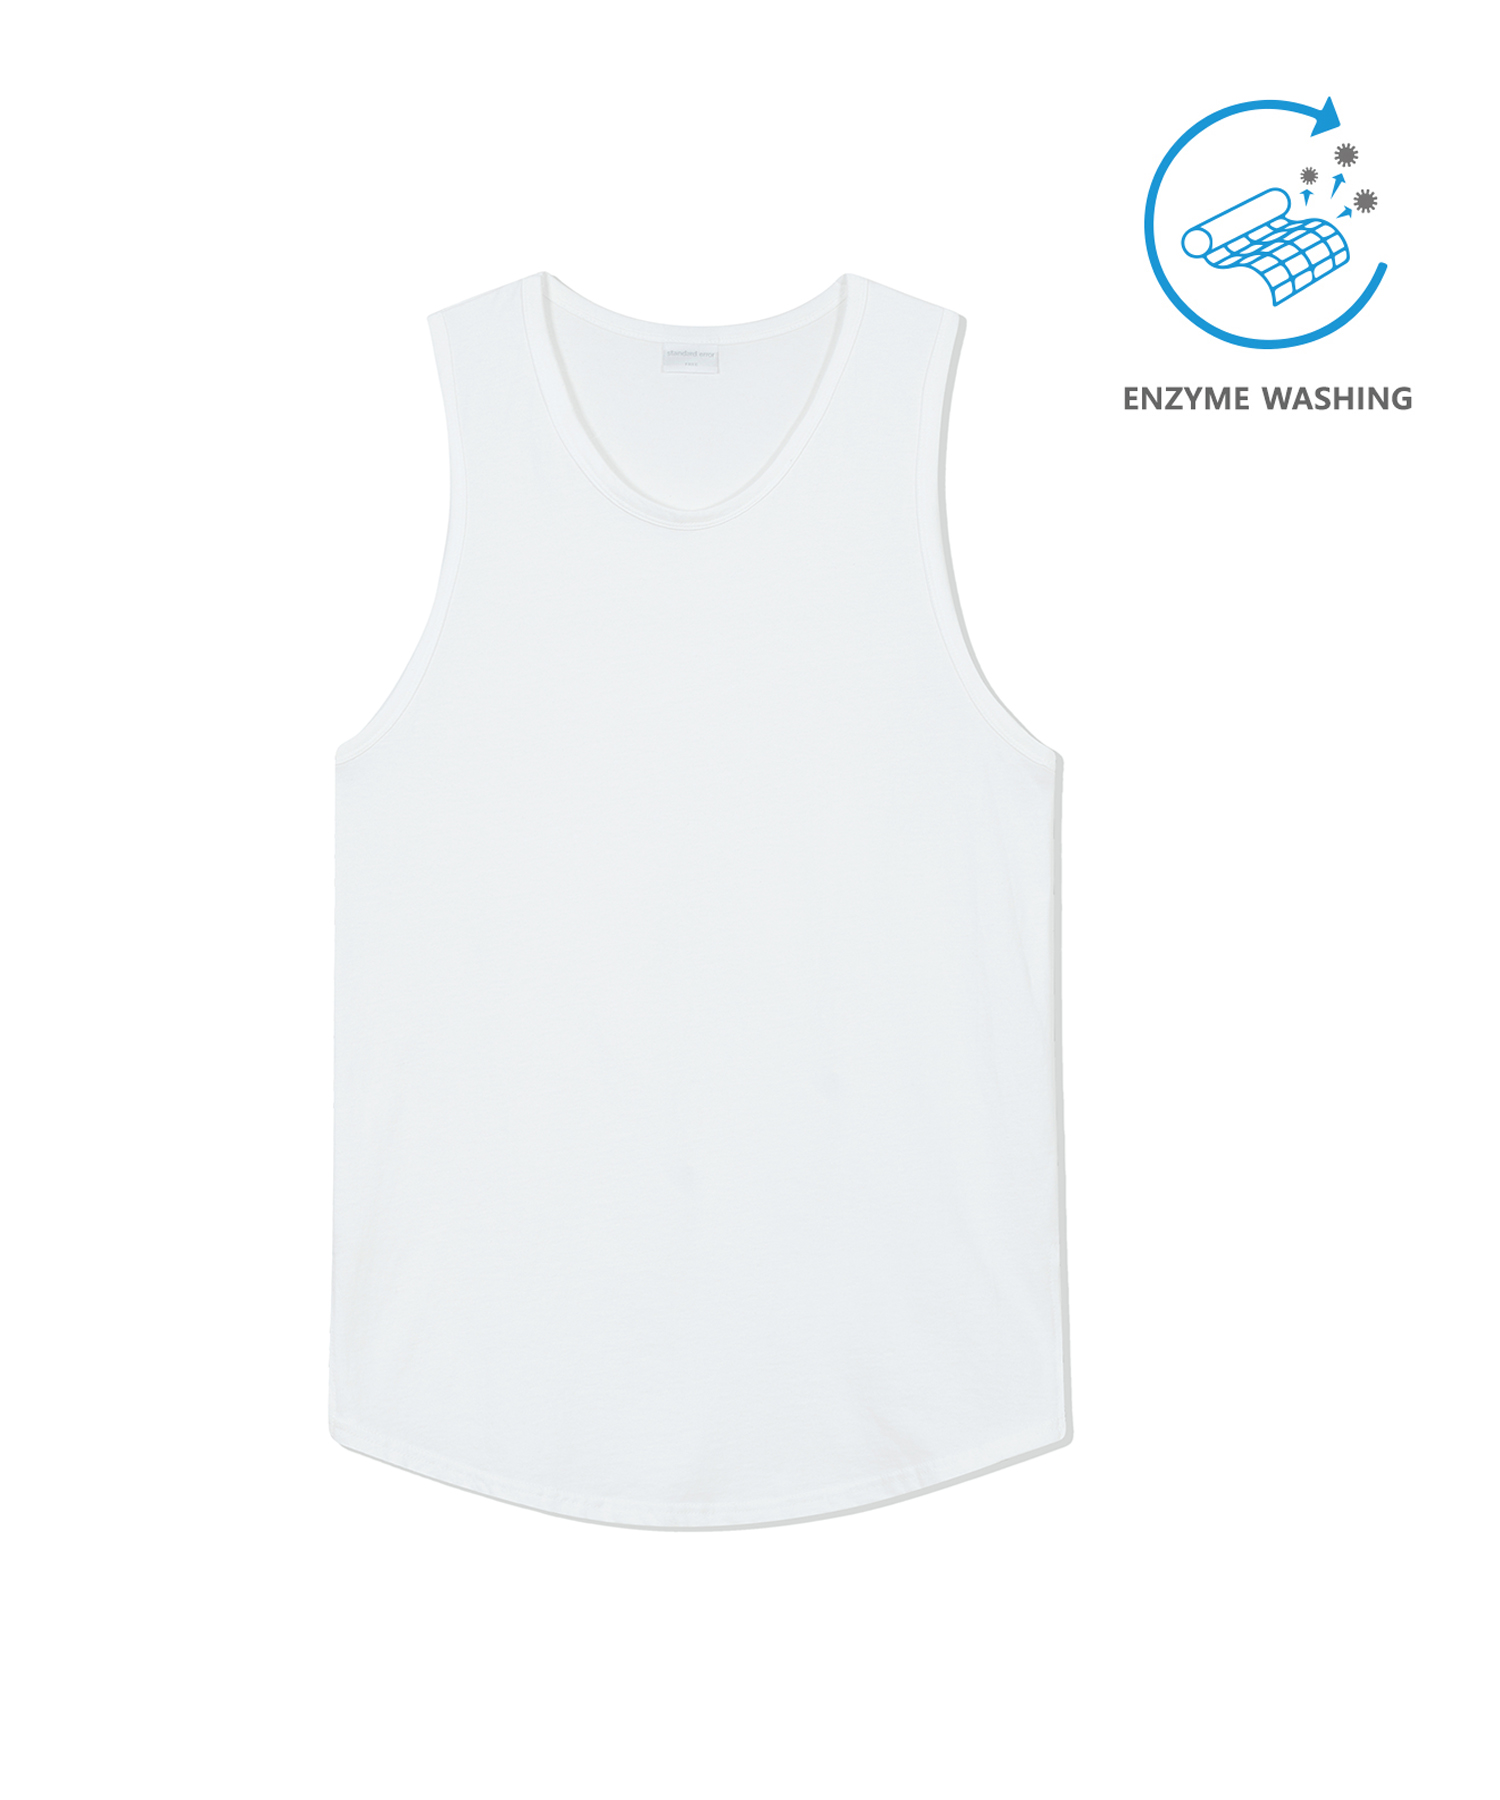 IRT163 [Compact Yan] Enzyme Washing Sleeveless White